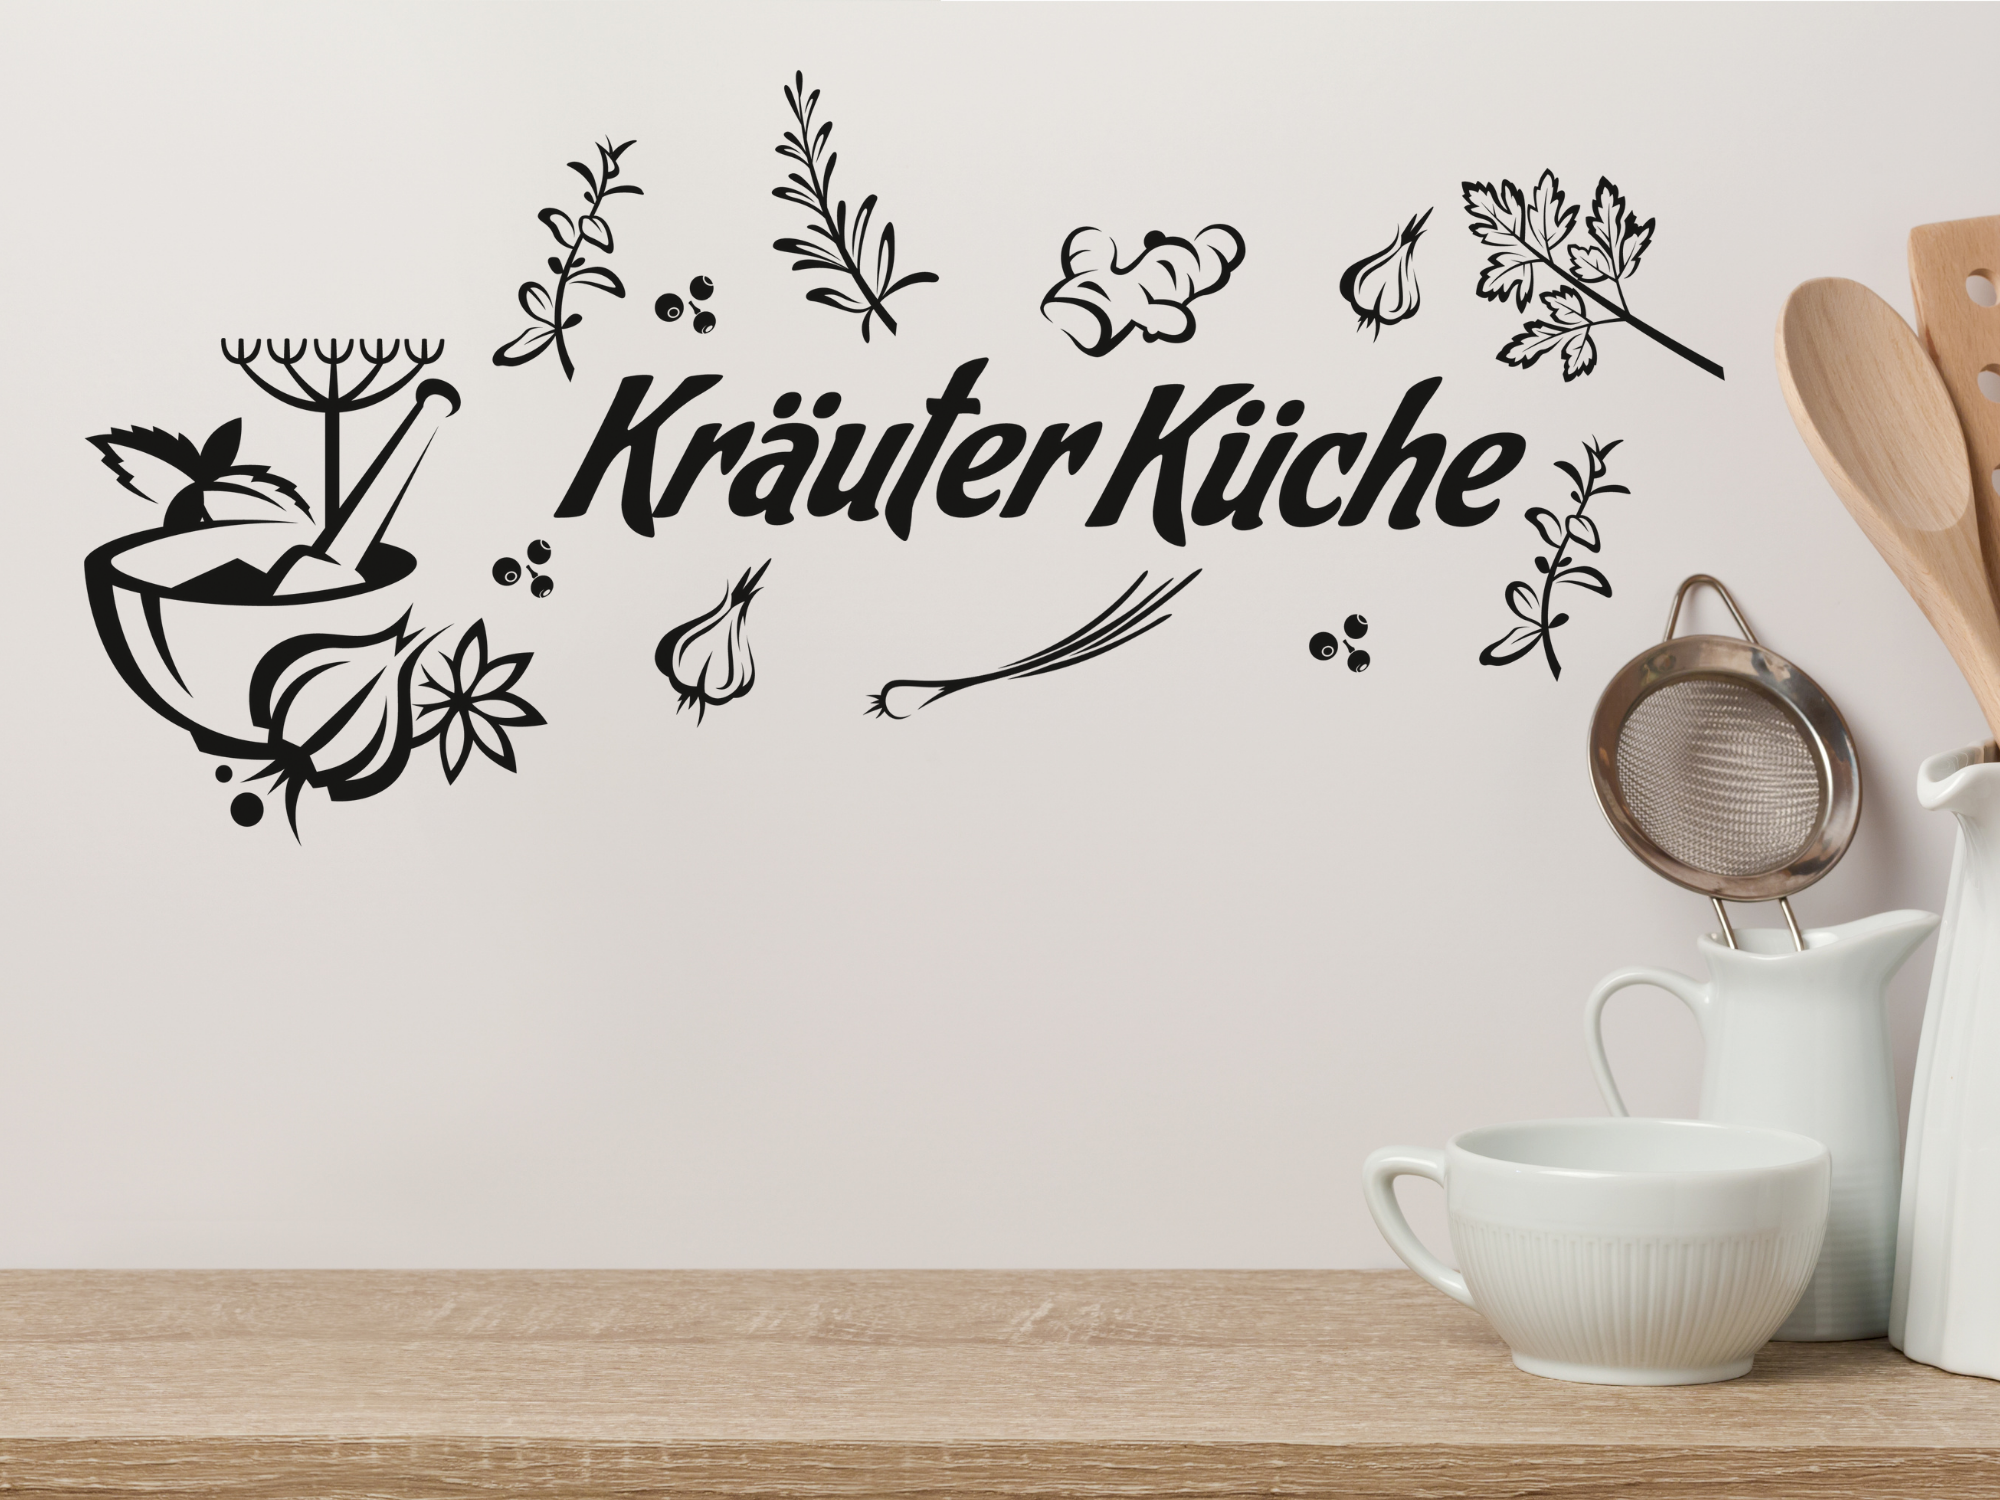 Set Wandtattoo Küche Graz-Design Gewürze | Kräuter und | | | Wandtattoo Kräuter Küche